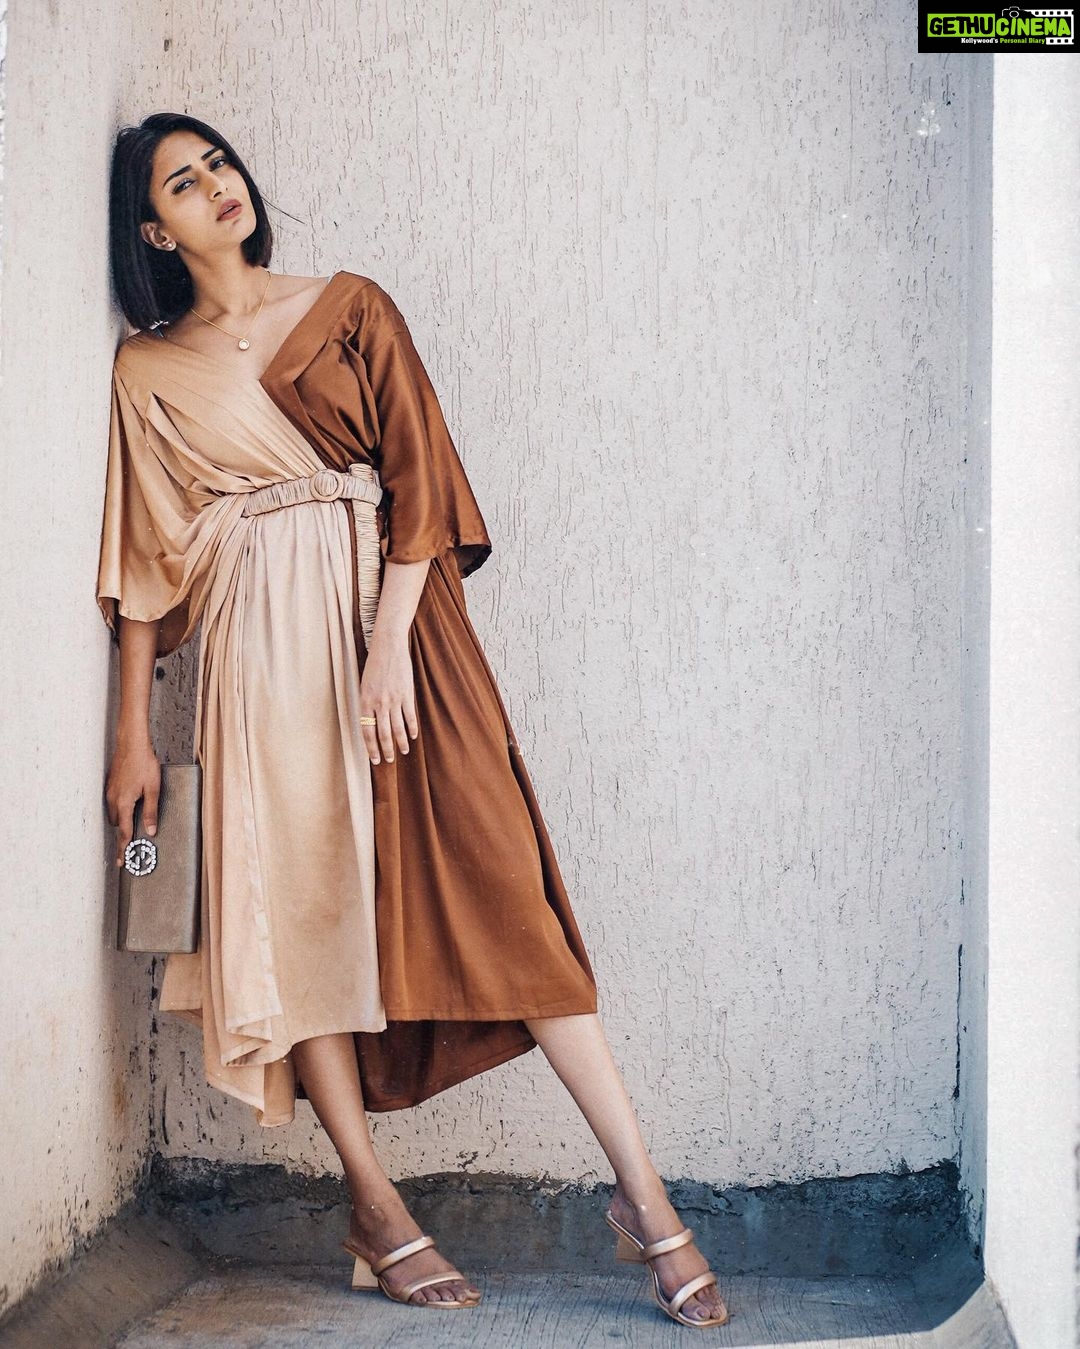 Erica Fernandes Instagram - Last day here 😢 . . Kimono set by @blanchejaipur